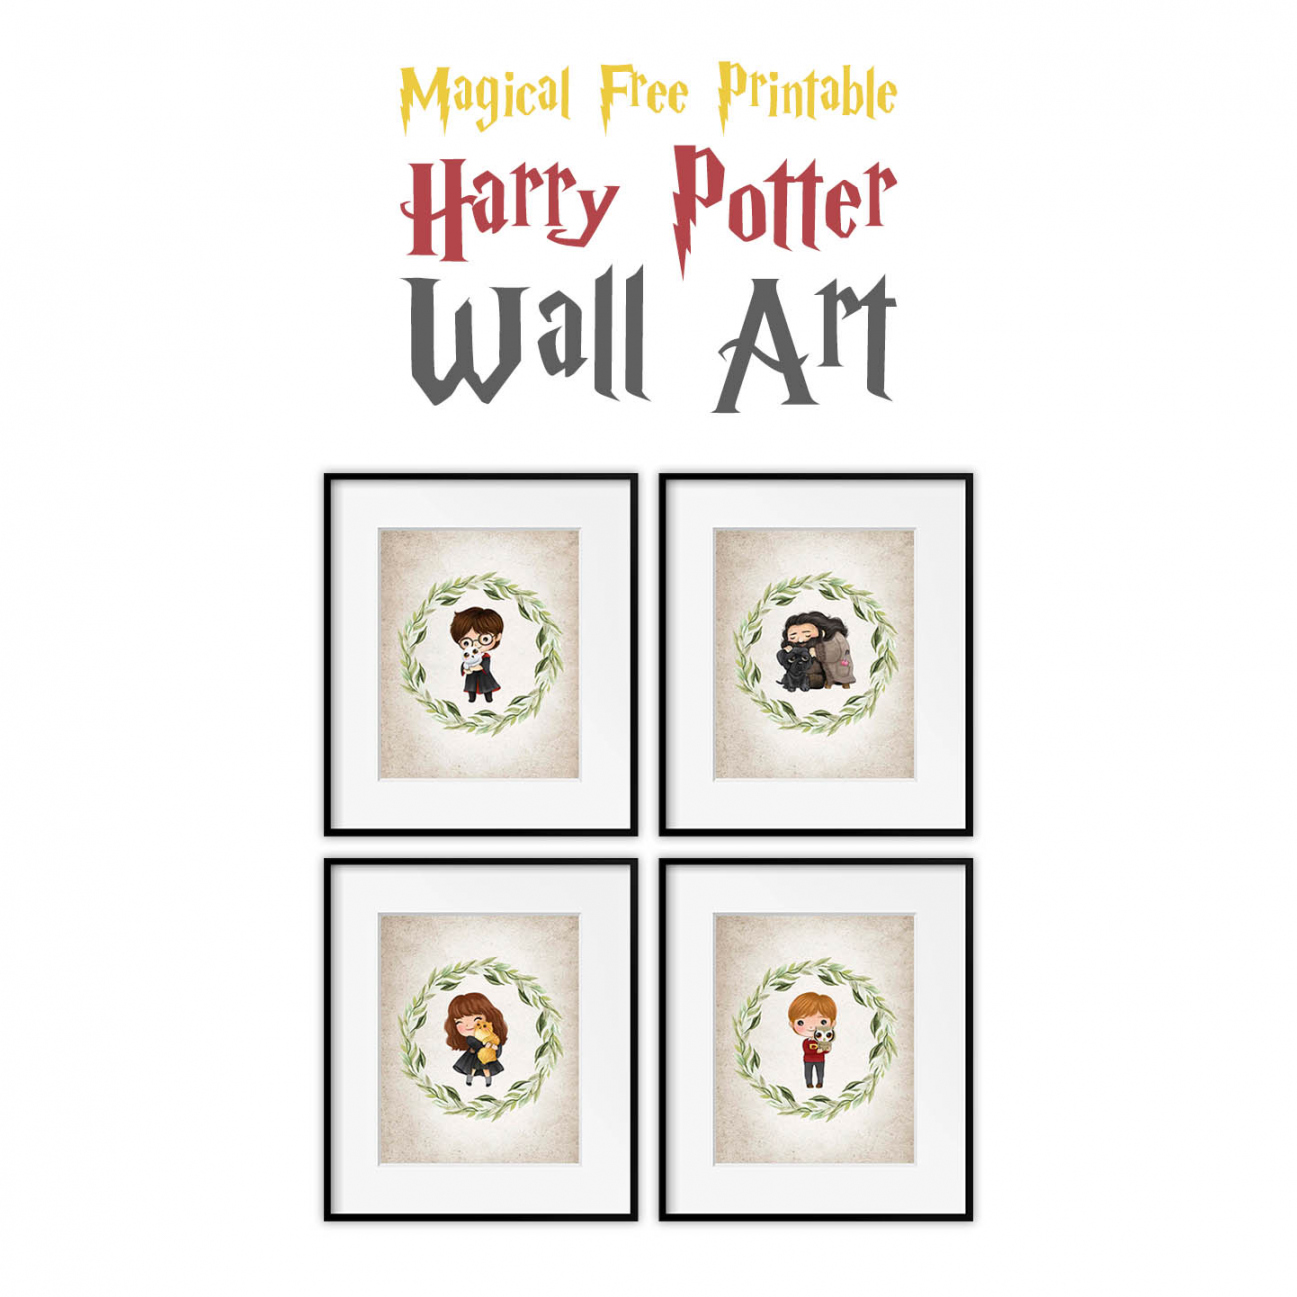 Magical Free Printable Harry Potter Wall Art - The Cottage Market - FREE Printables - Free Printable Harry Potter